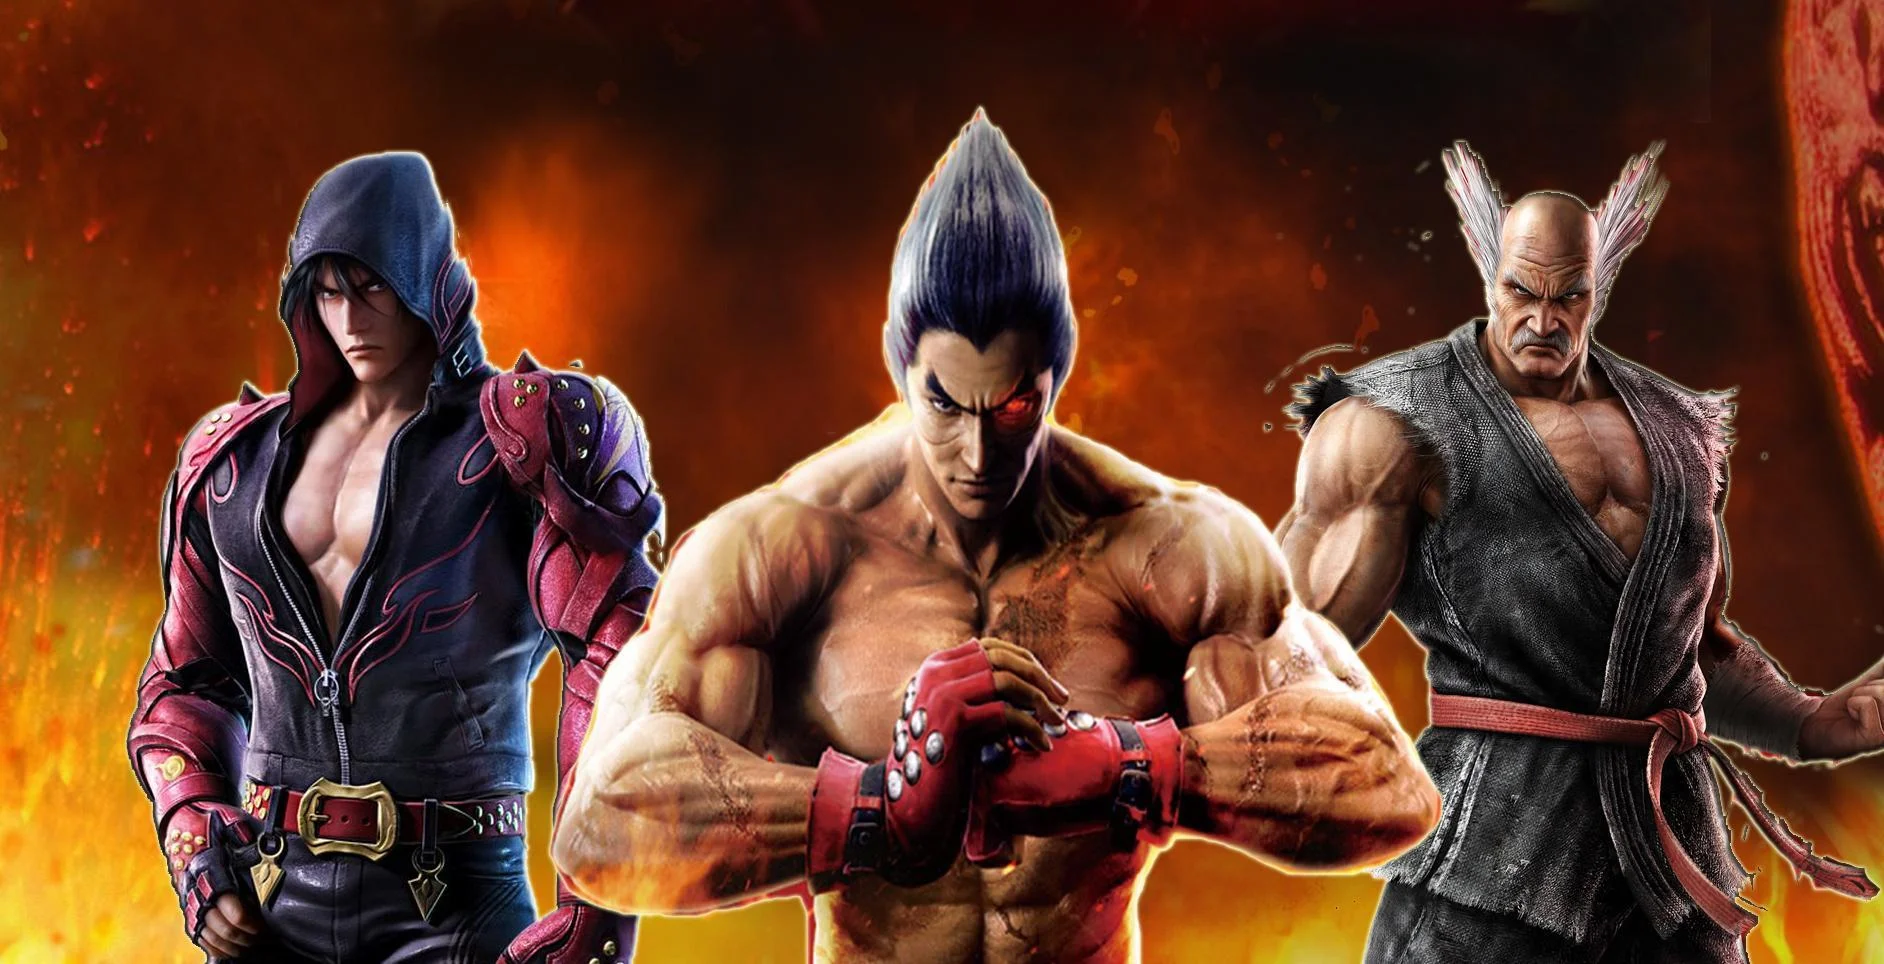 Гифка дня: жестокое избиение в Tekken - фото 1